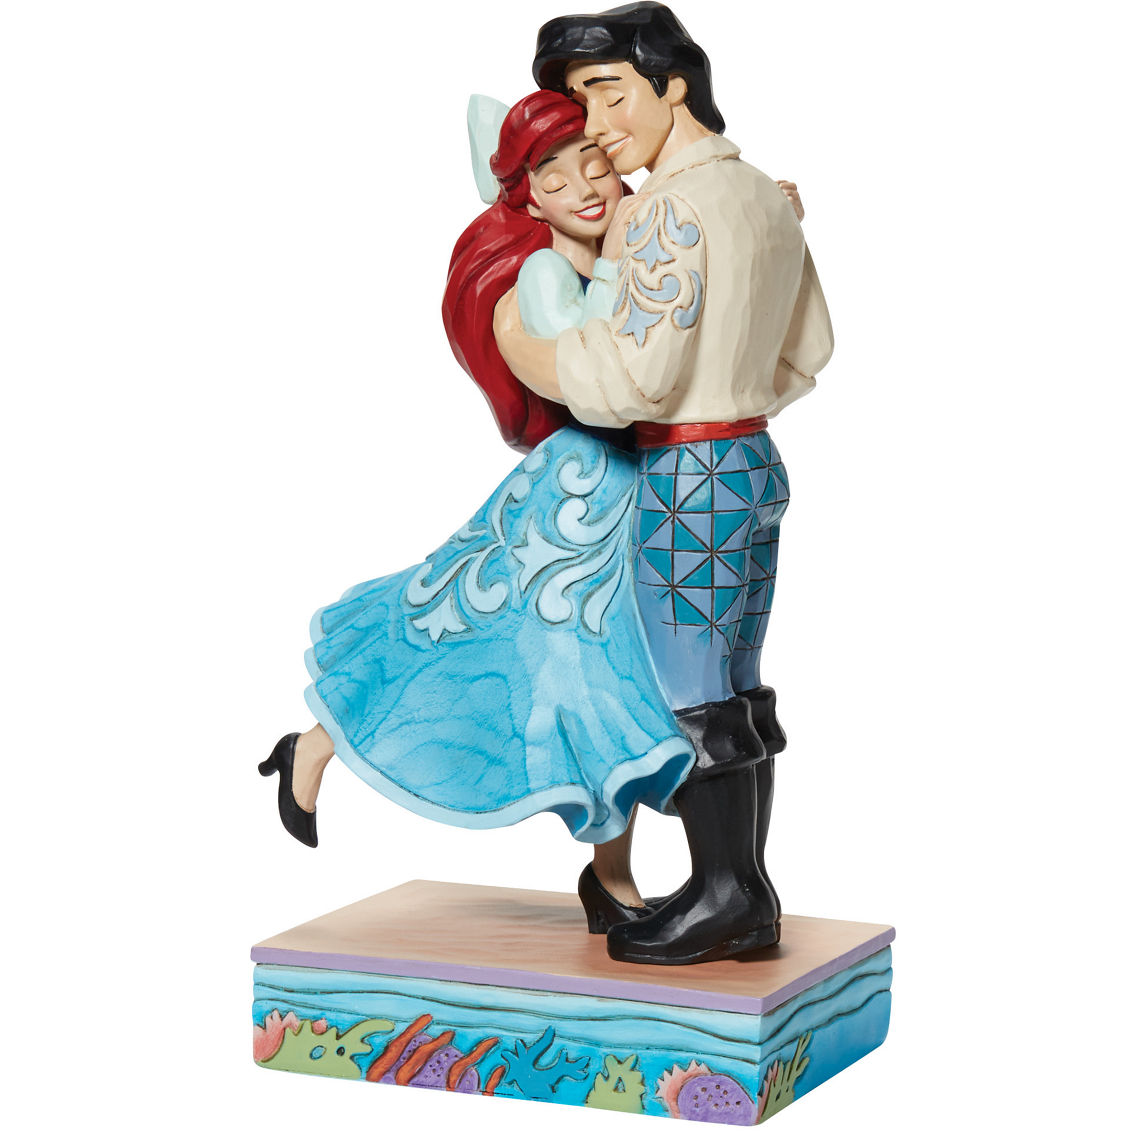 Jim Shore Disney Traditions Ariel & Eric Love Figurine - Image 3 of 3